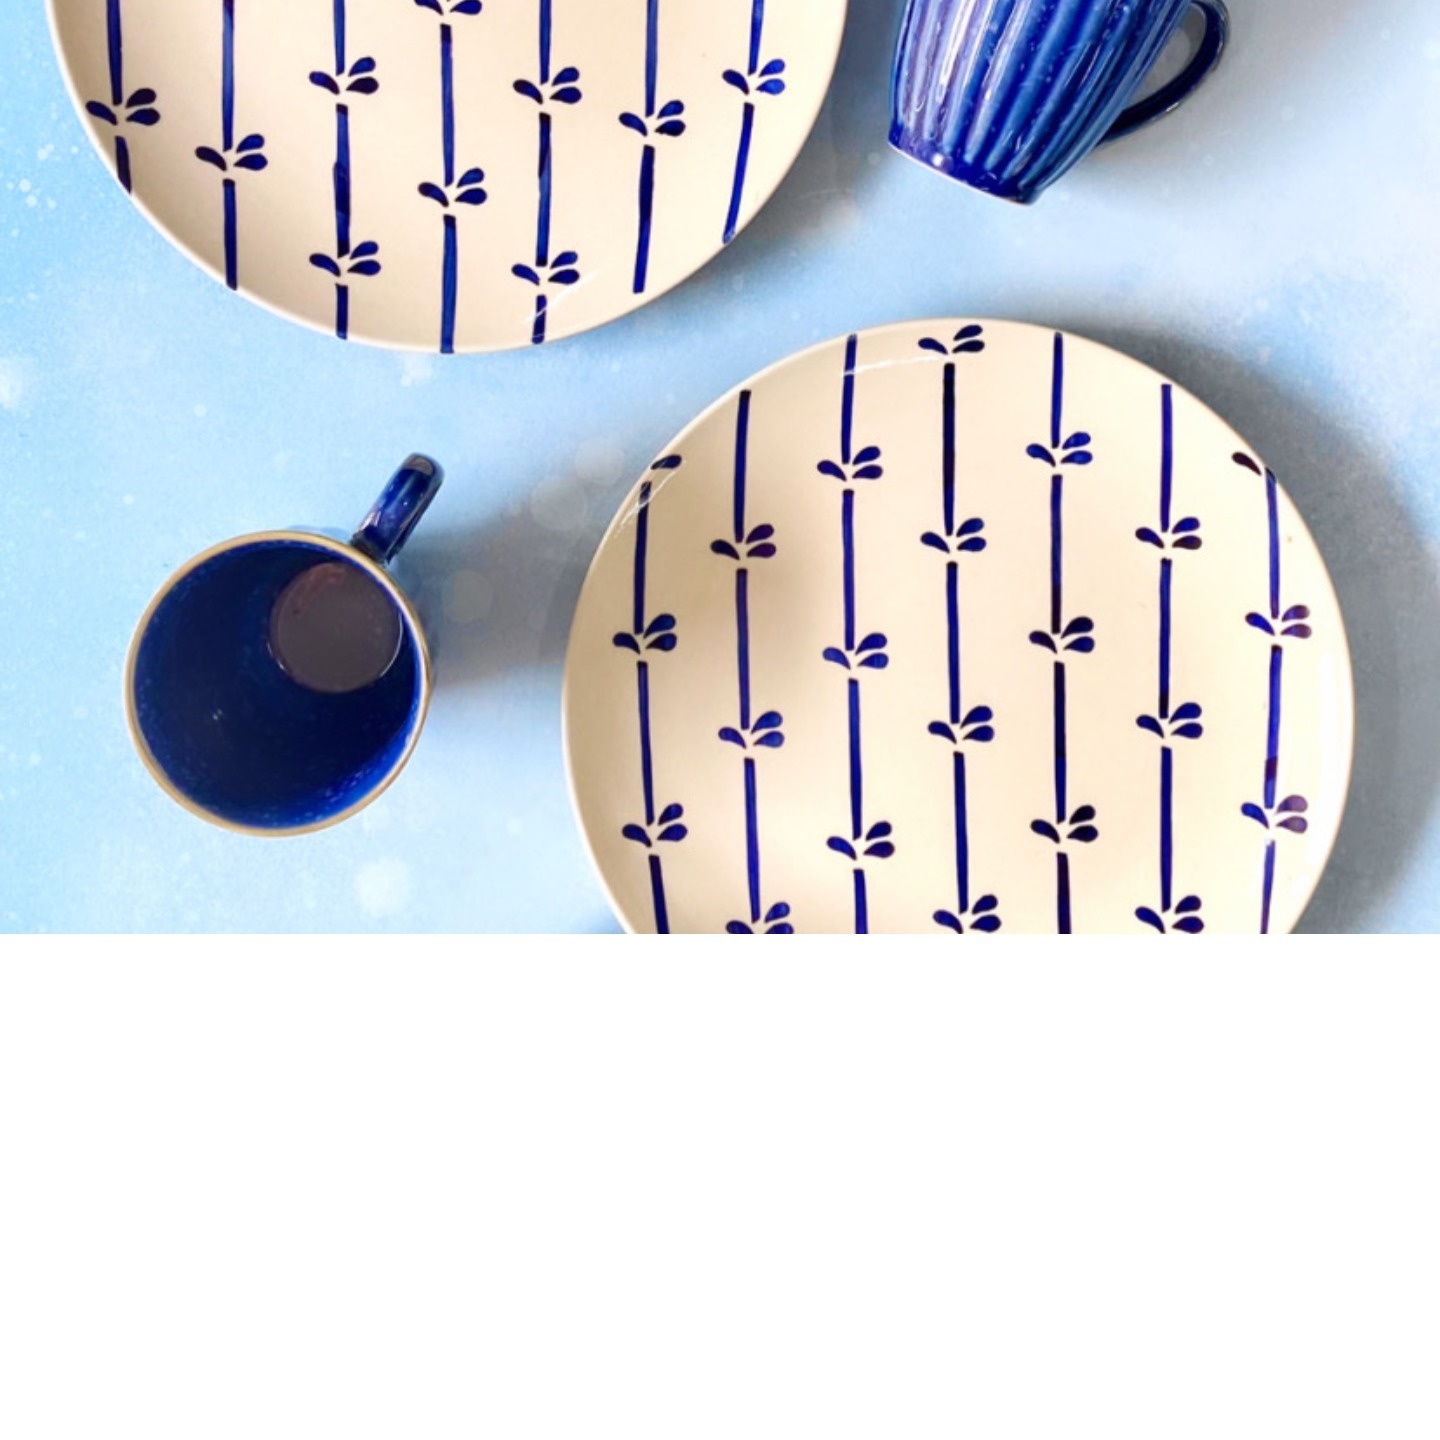 Blue Leaf Dinner Plate